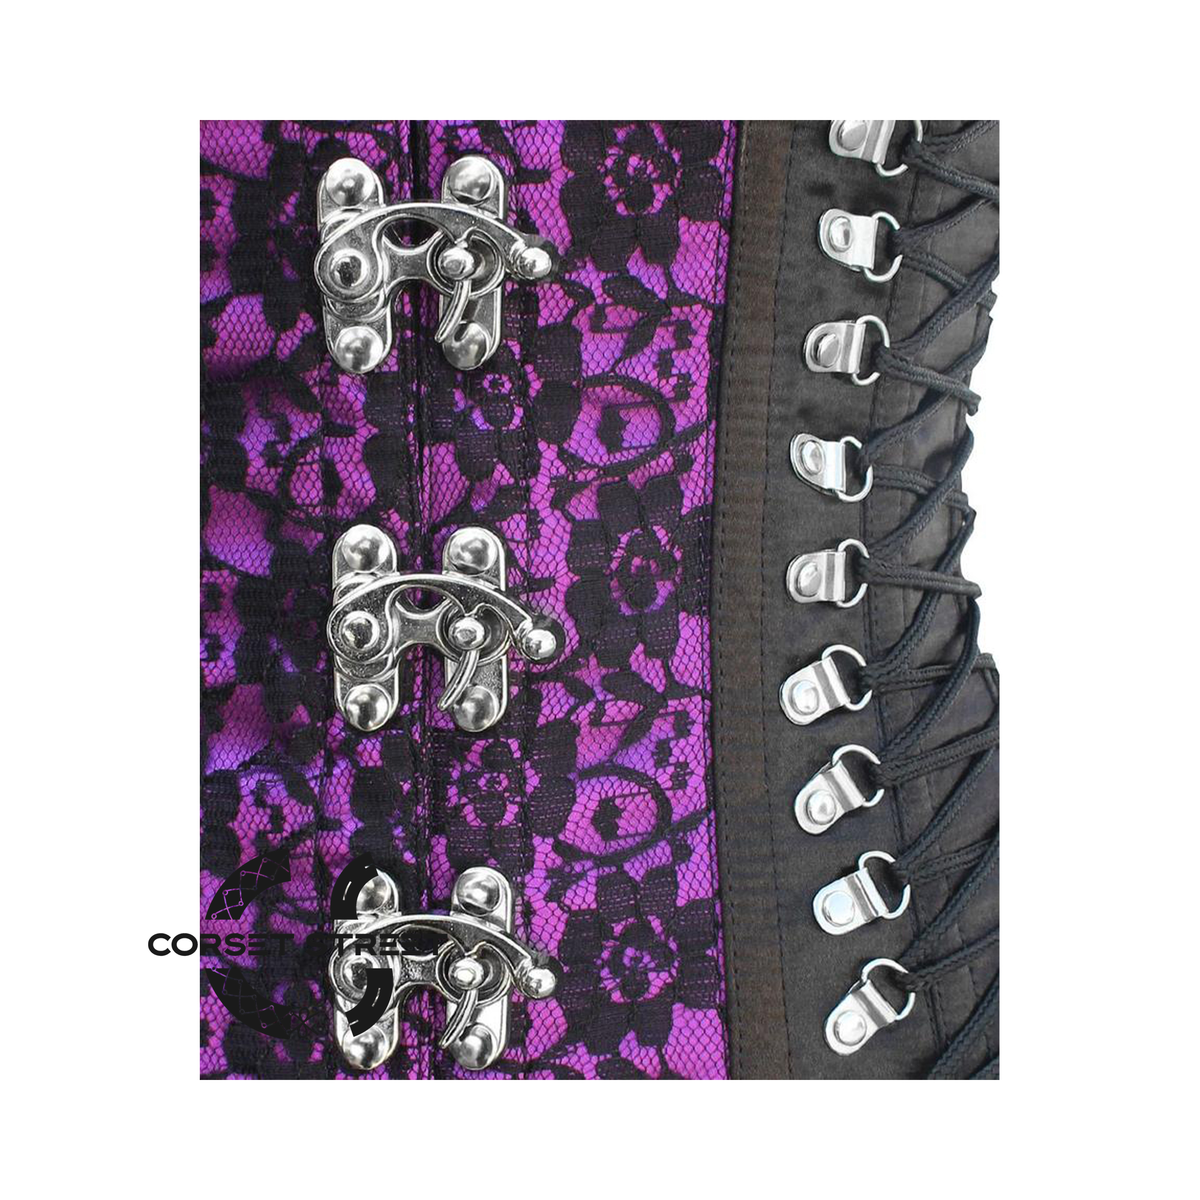 Purple And Black Satin Net Overlay Gothic Waist Training Steampunk Underbust Corset